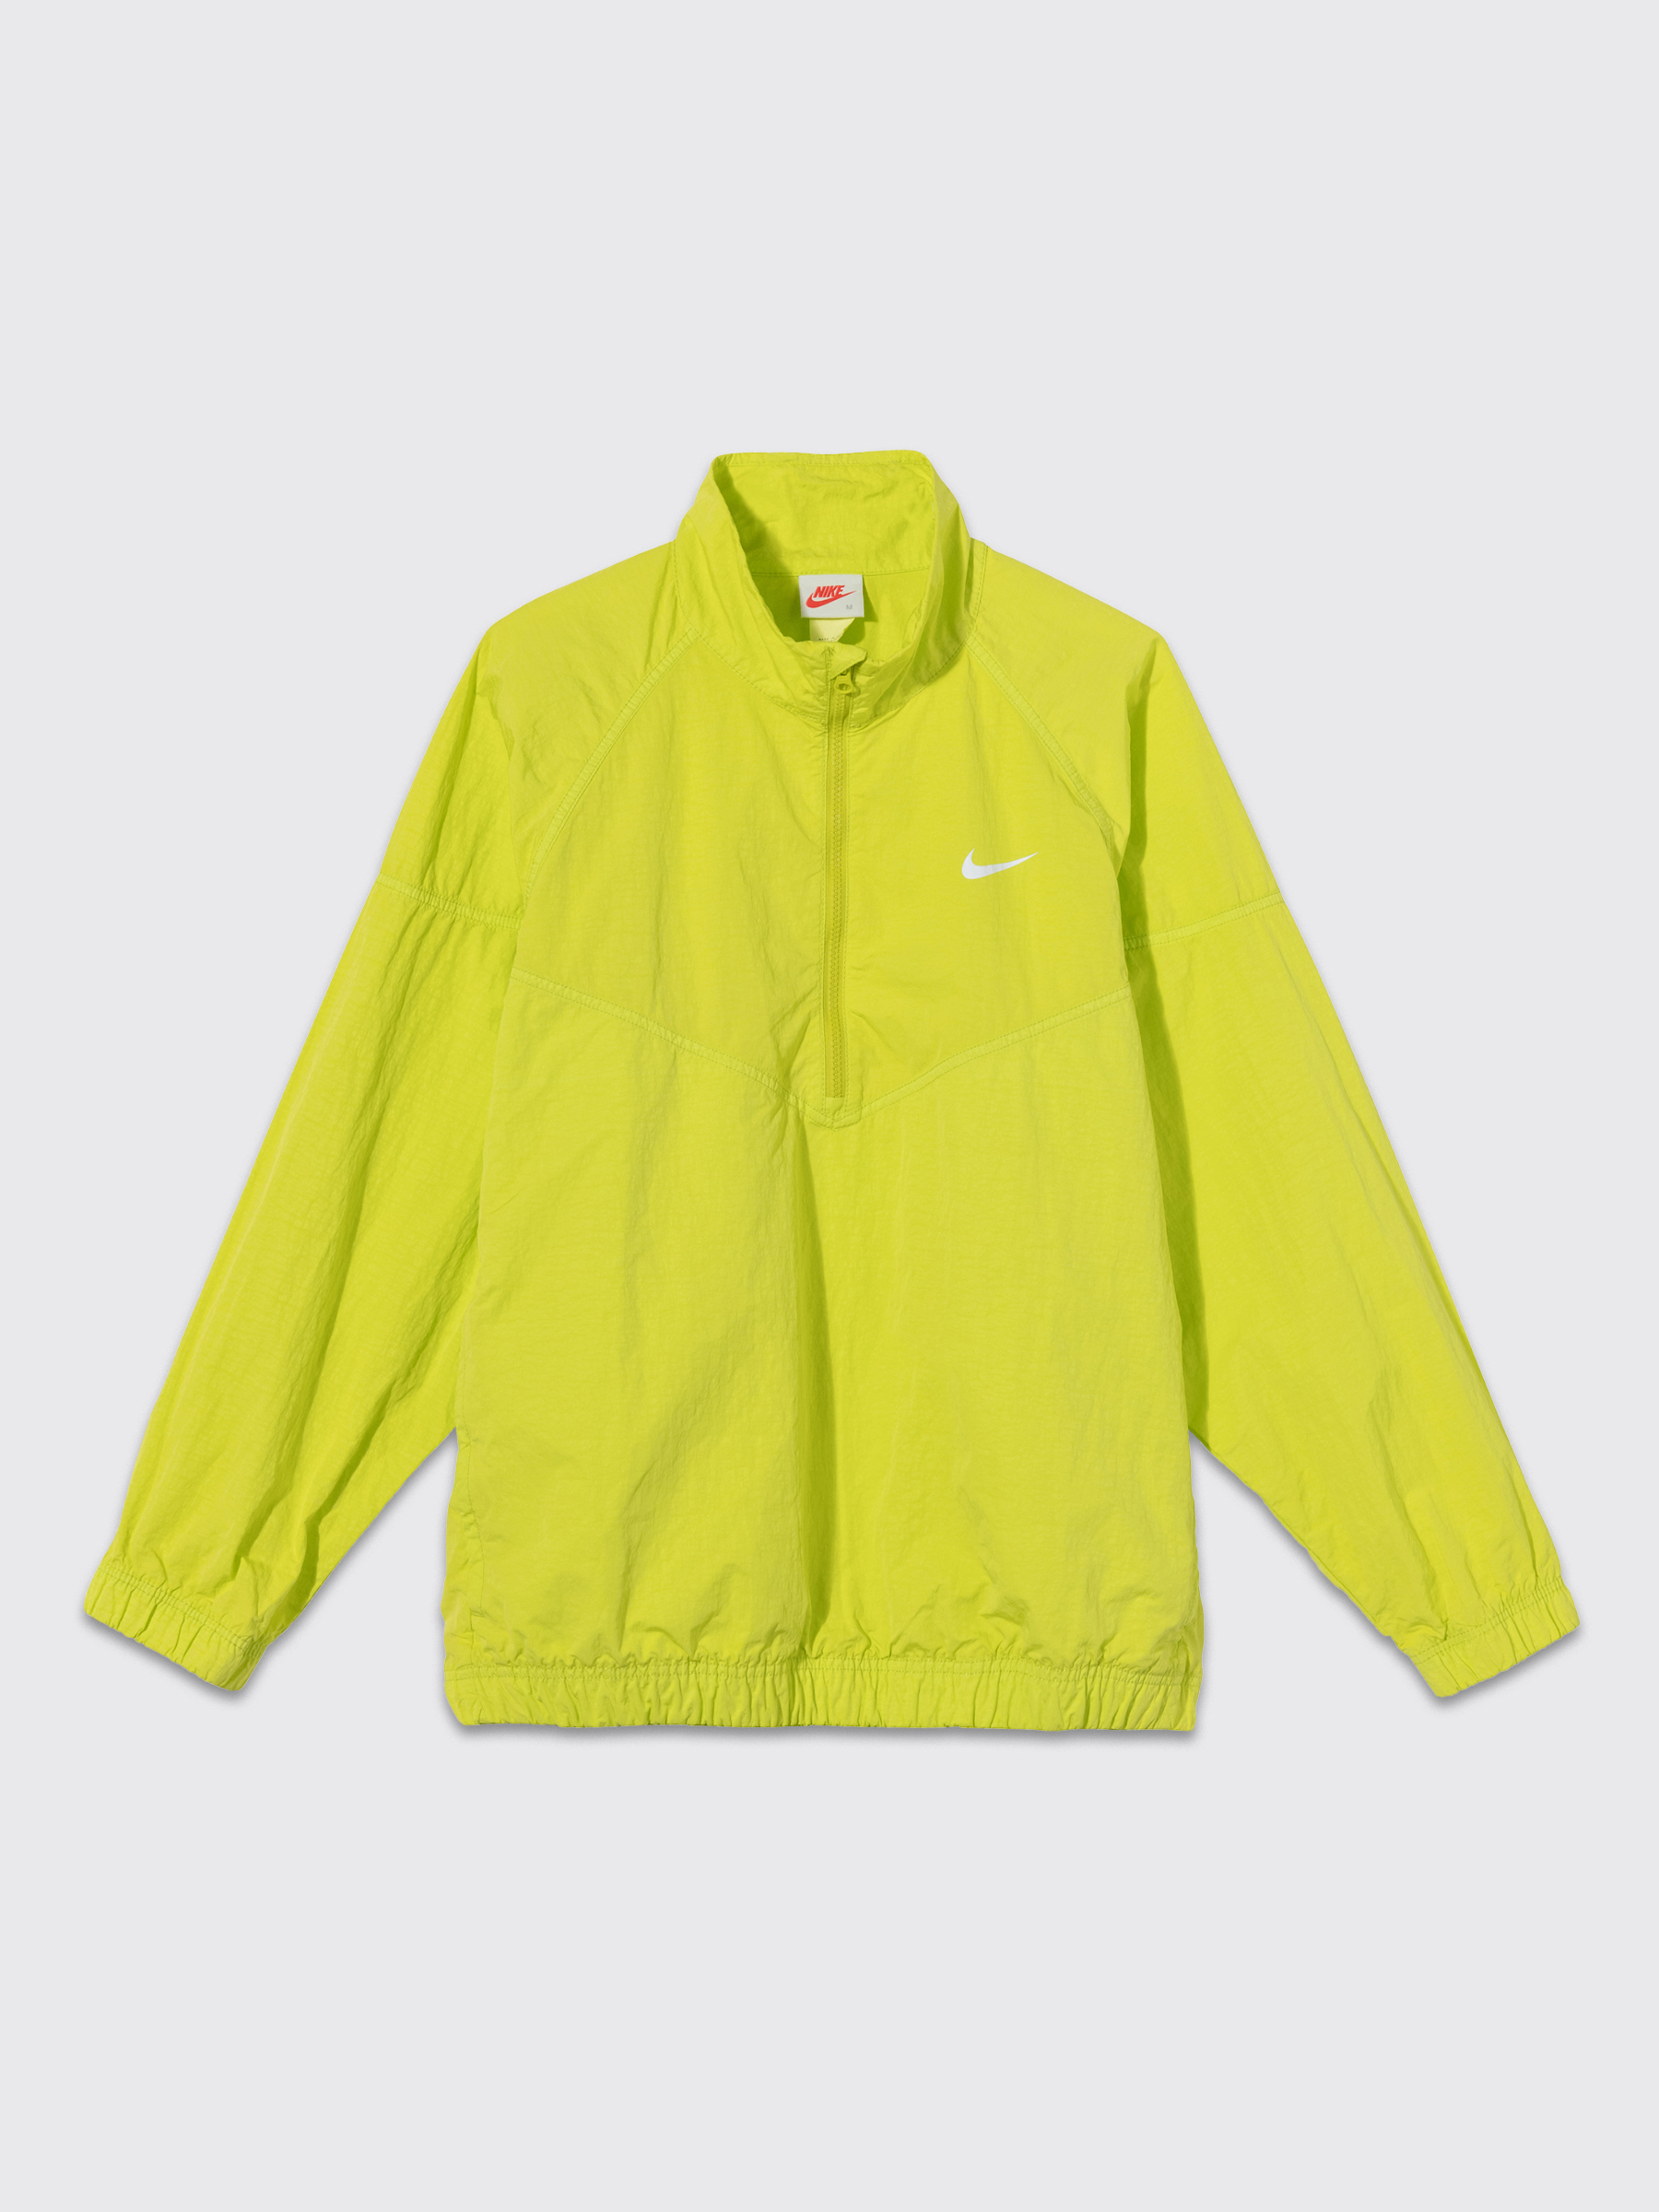 green jacket nike